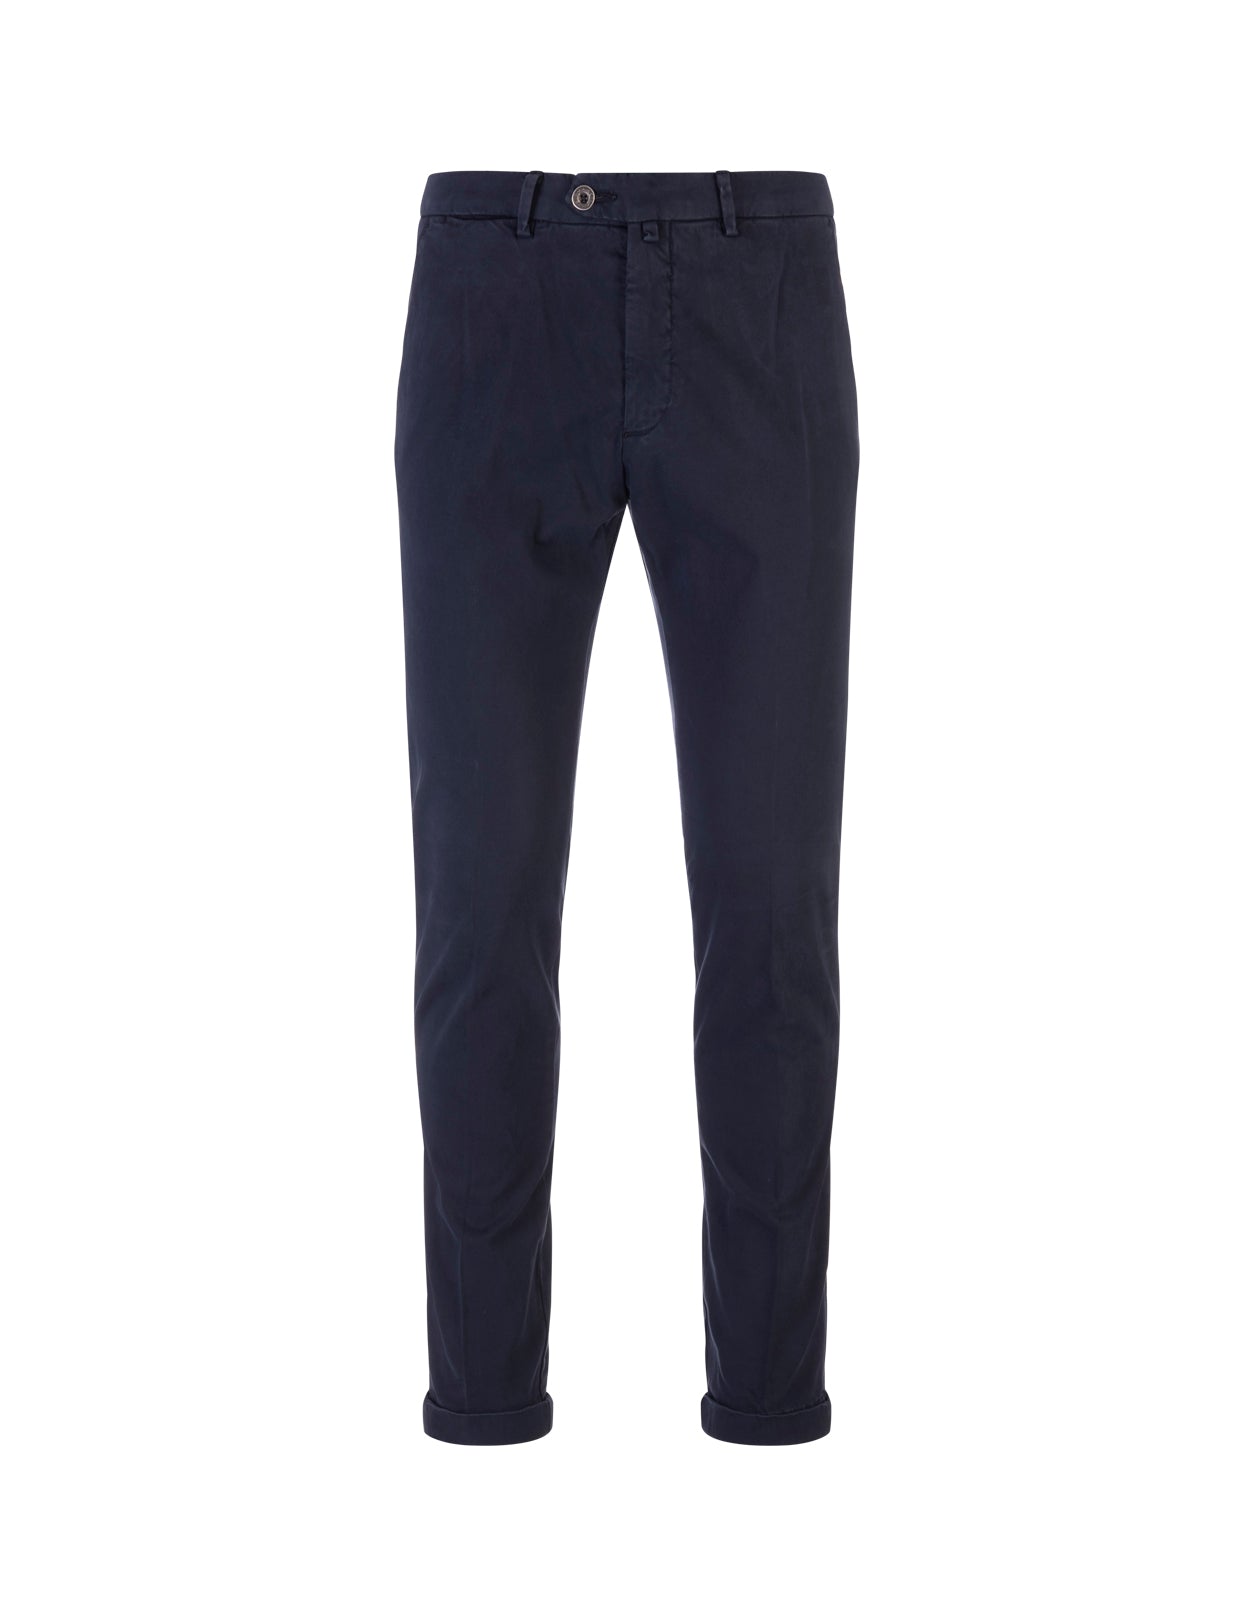 Pantalone Slim Fit BSettecento / Blu - Ideal Moda